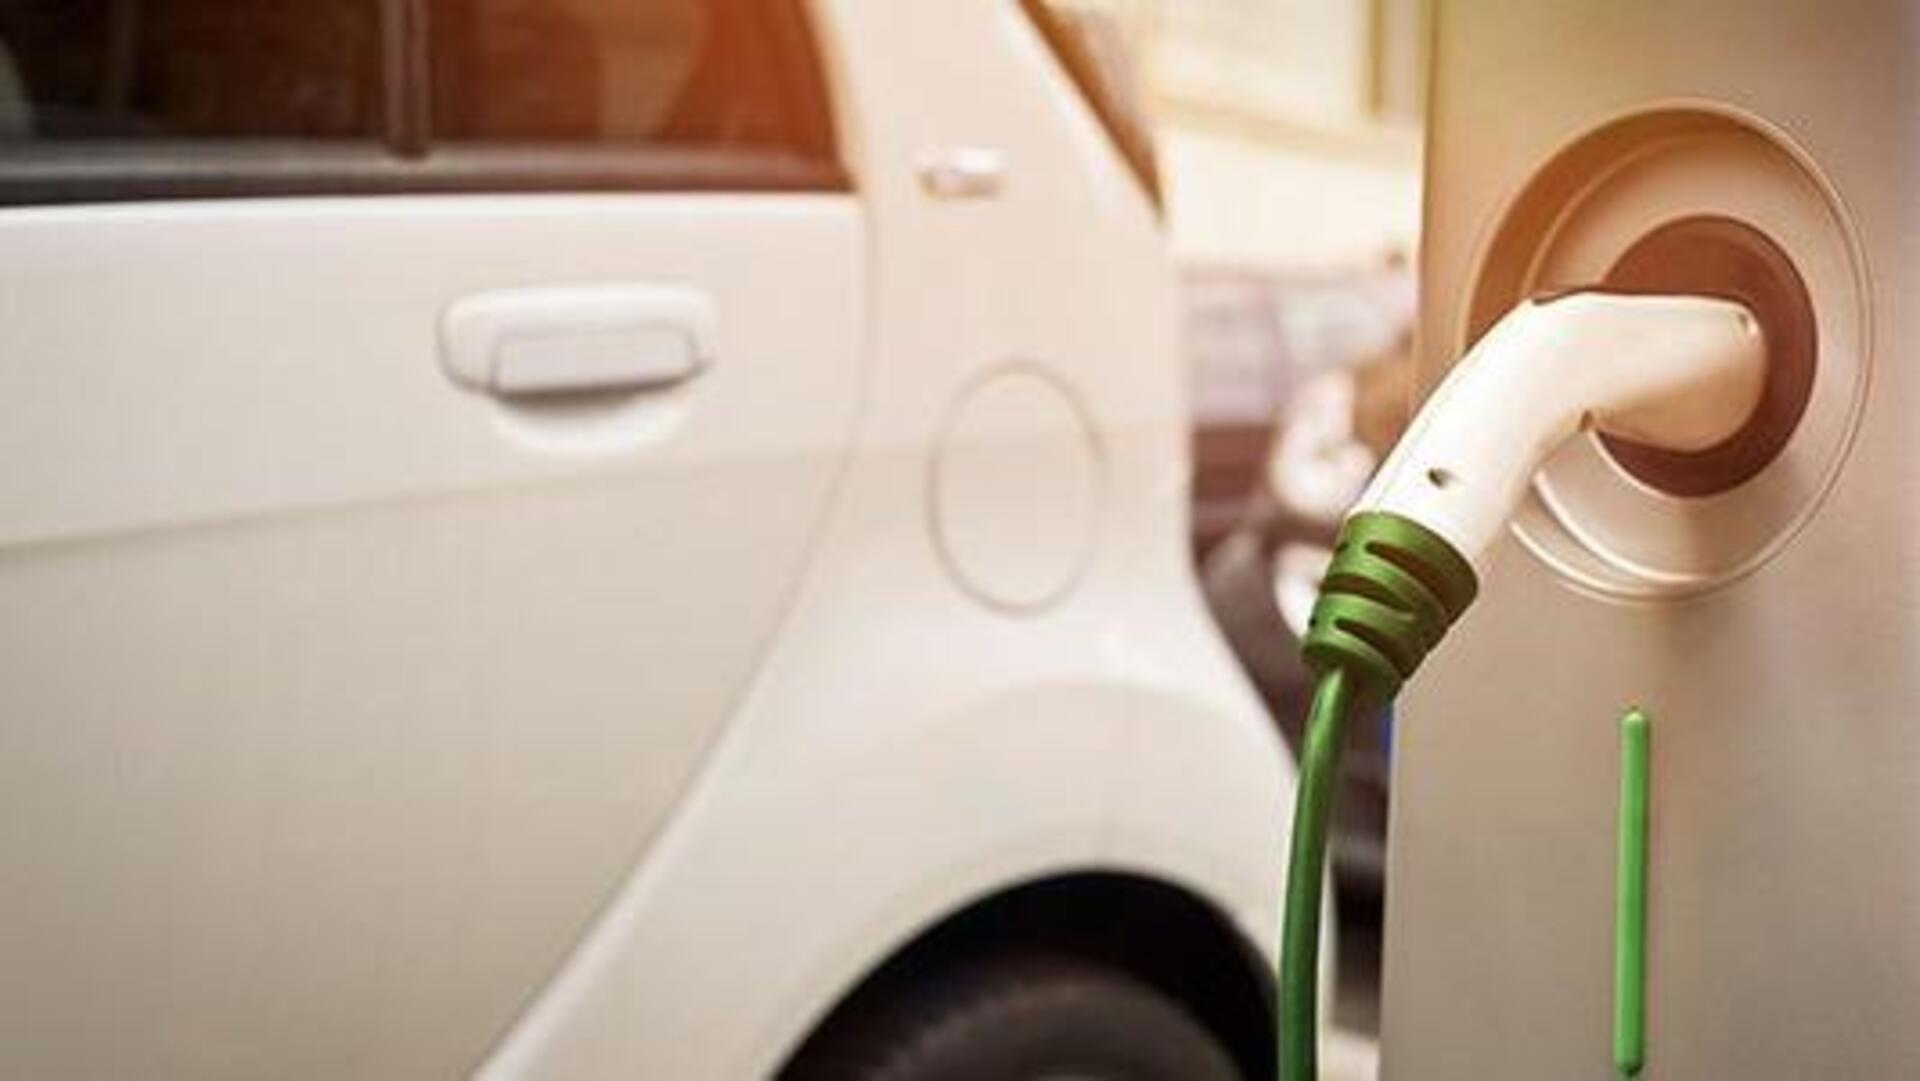 पेट्रोलियम कंपनियां दे रहीं इलेक्ट्रिक मोबिलिटी को बढ़ावा, खोले करीब 9,000 EV चार्जिंग स्टेशन 